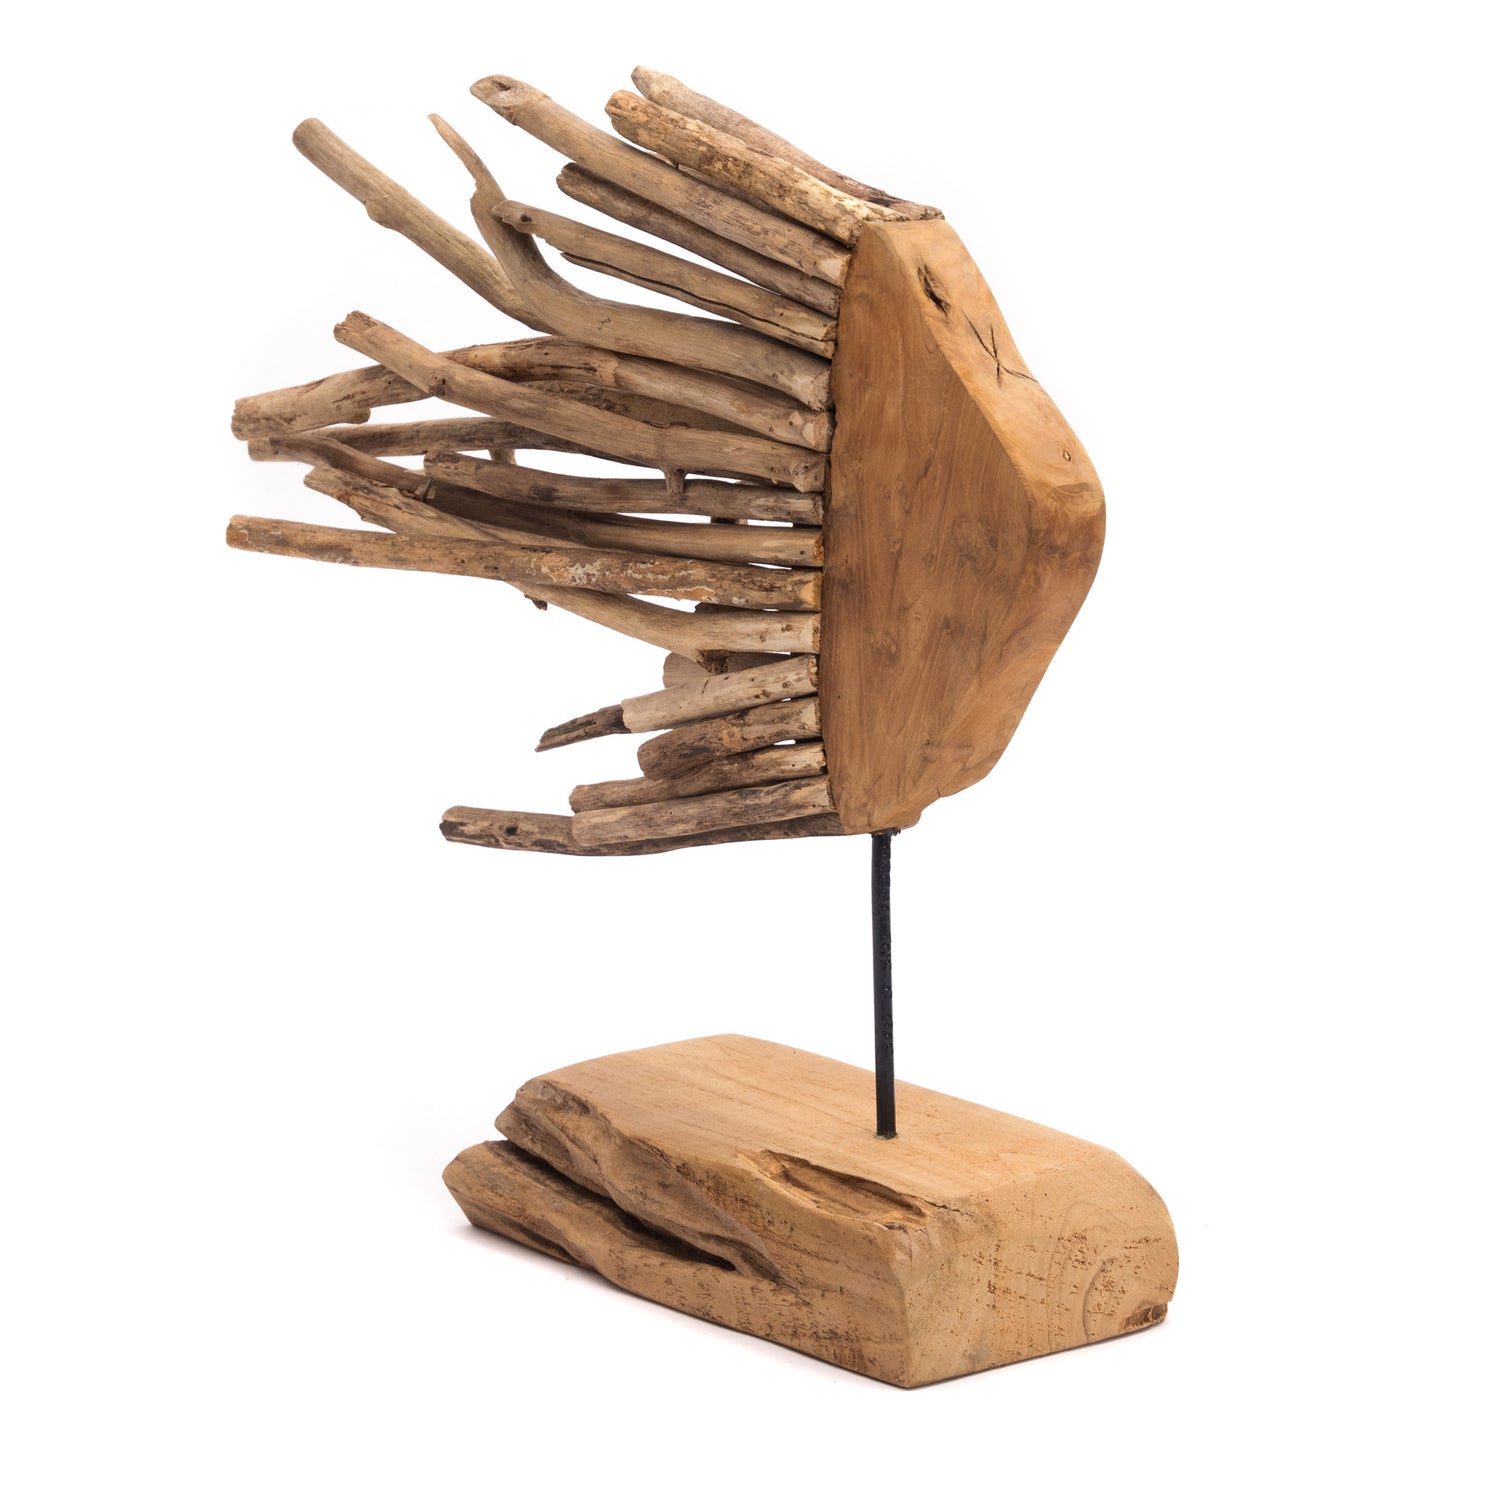 FISCH SKULPTUR "SEA" | 55 cm, Teakholz | Deko-Objekt Fisch, Holz Figur